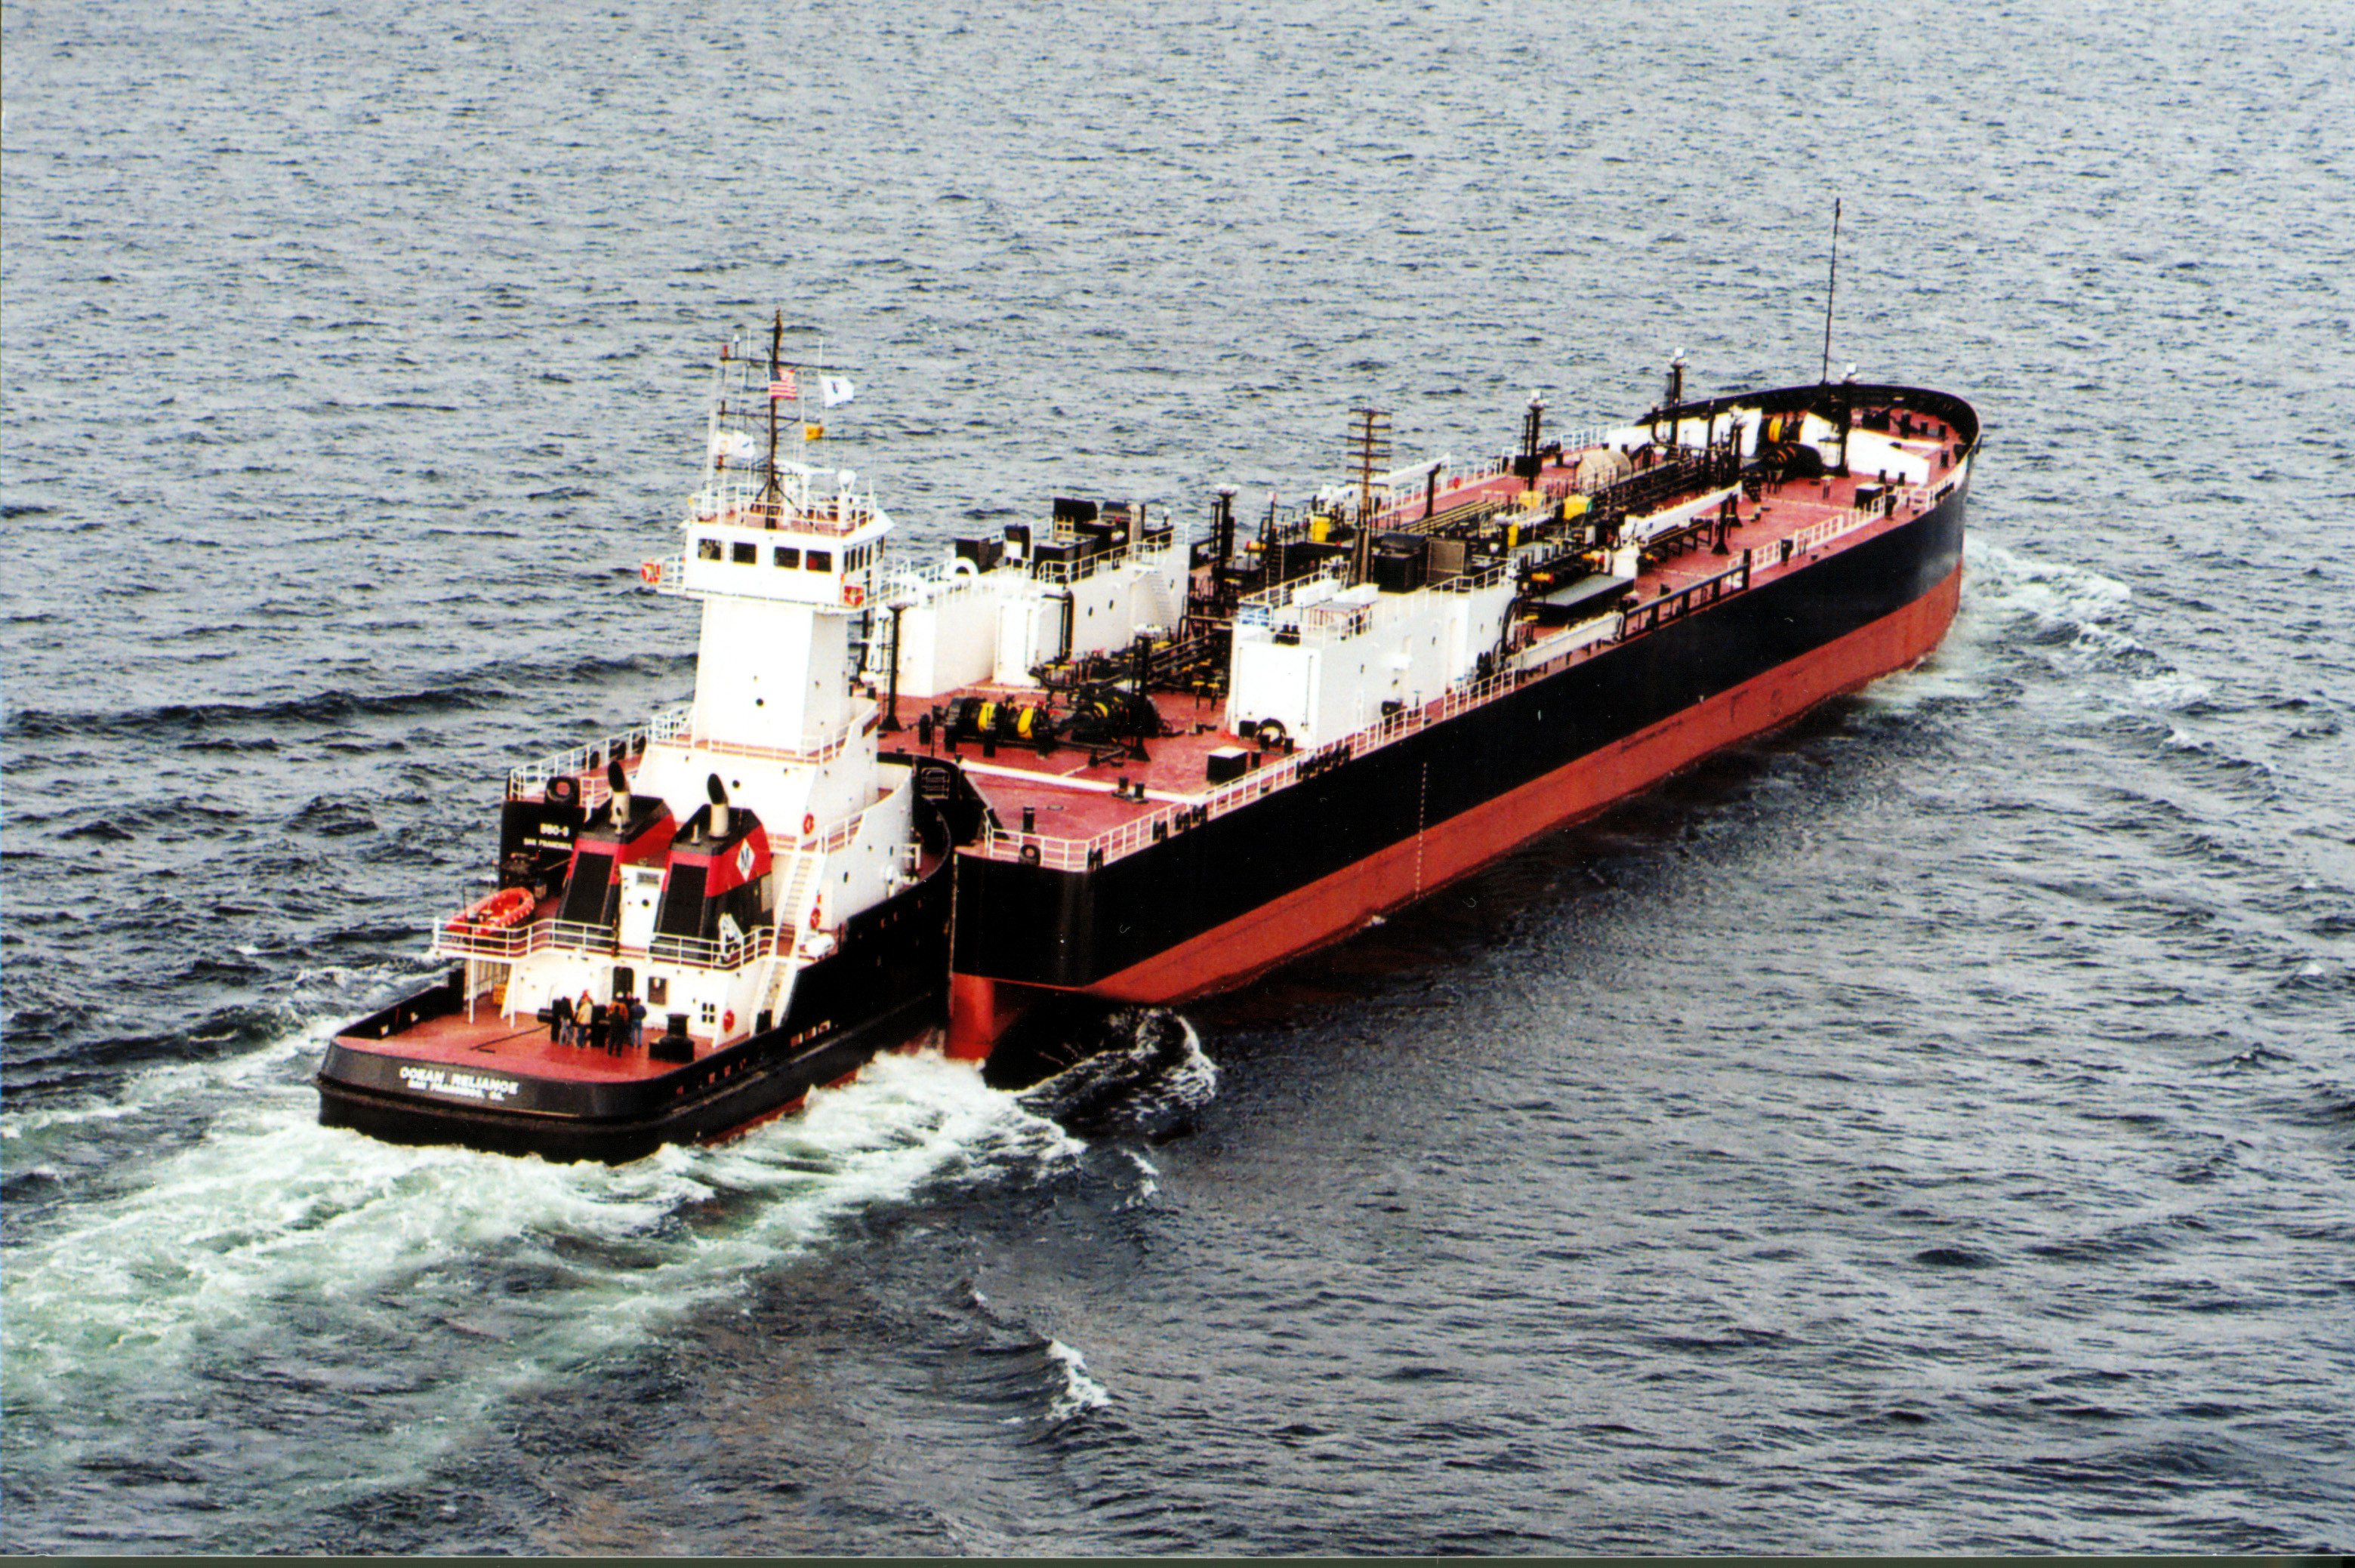 Transportation Safety Board to investigate sunken tug in B.C.'s